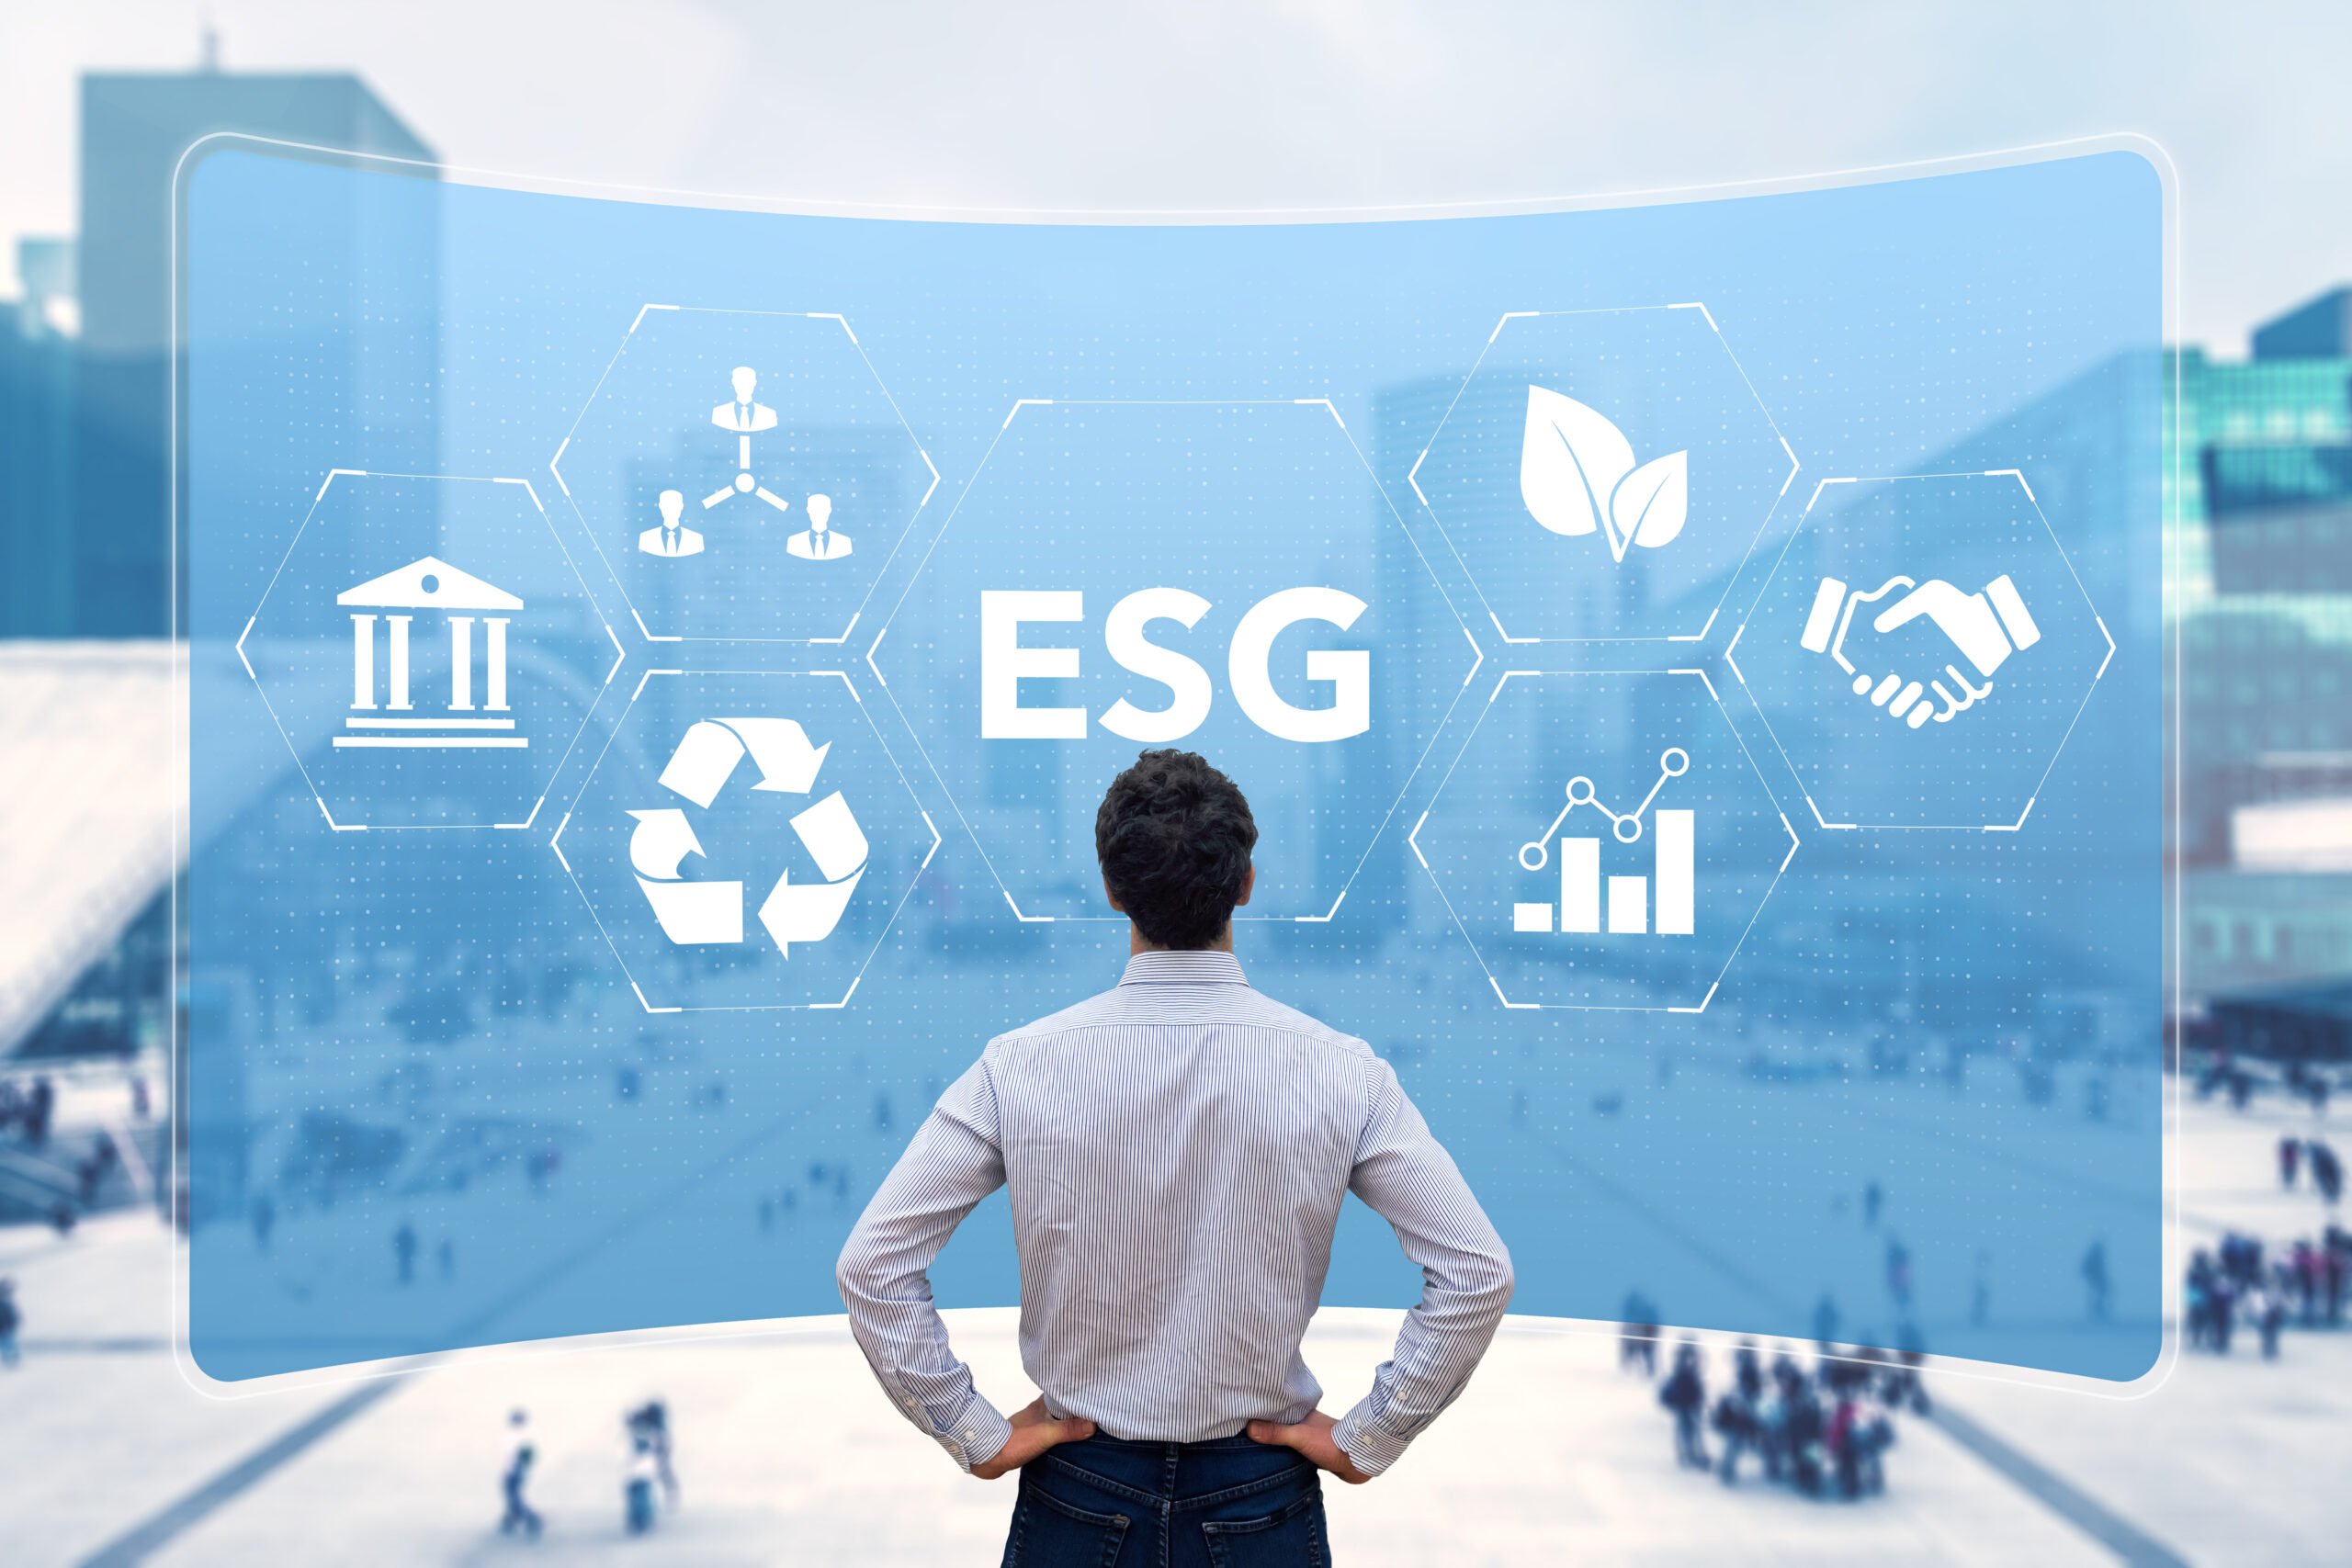 ESG. Economic, Social, Governance